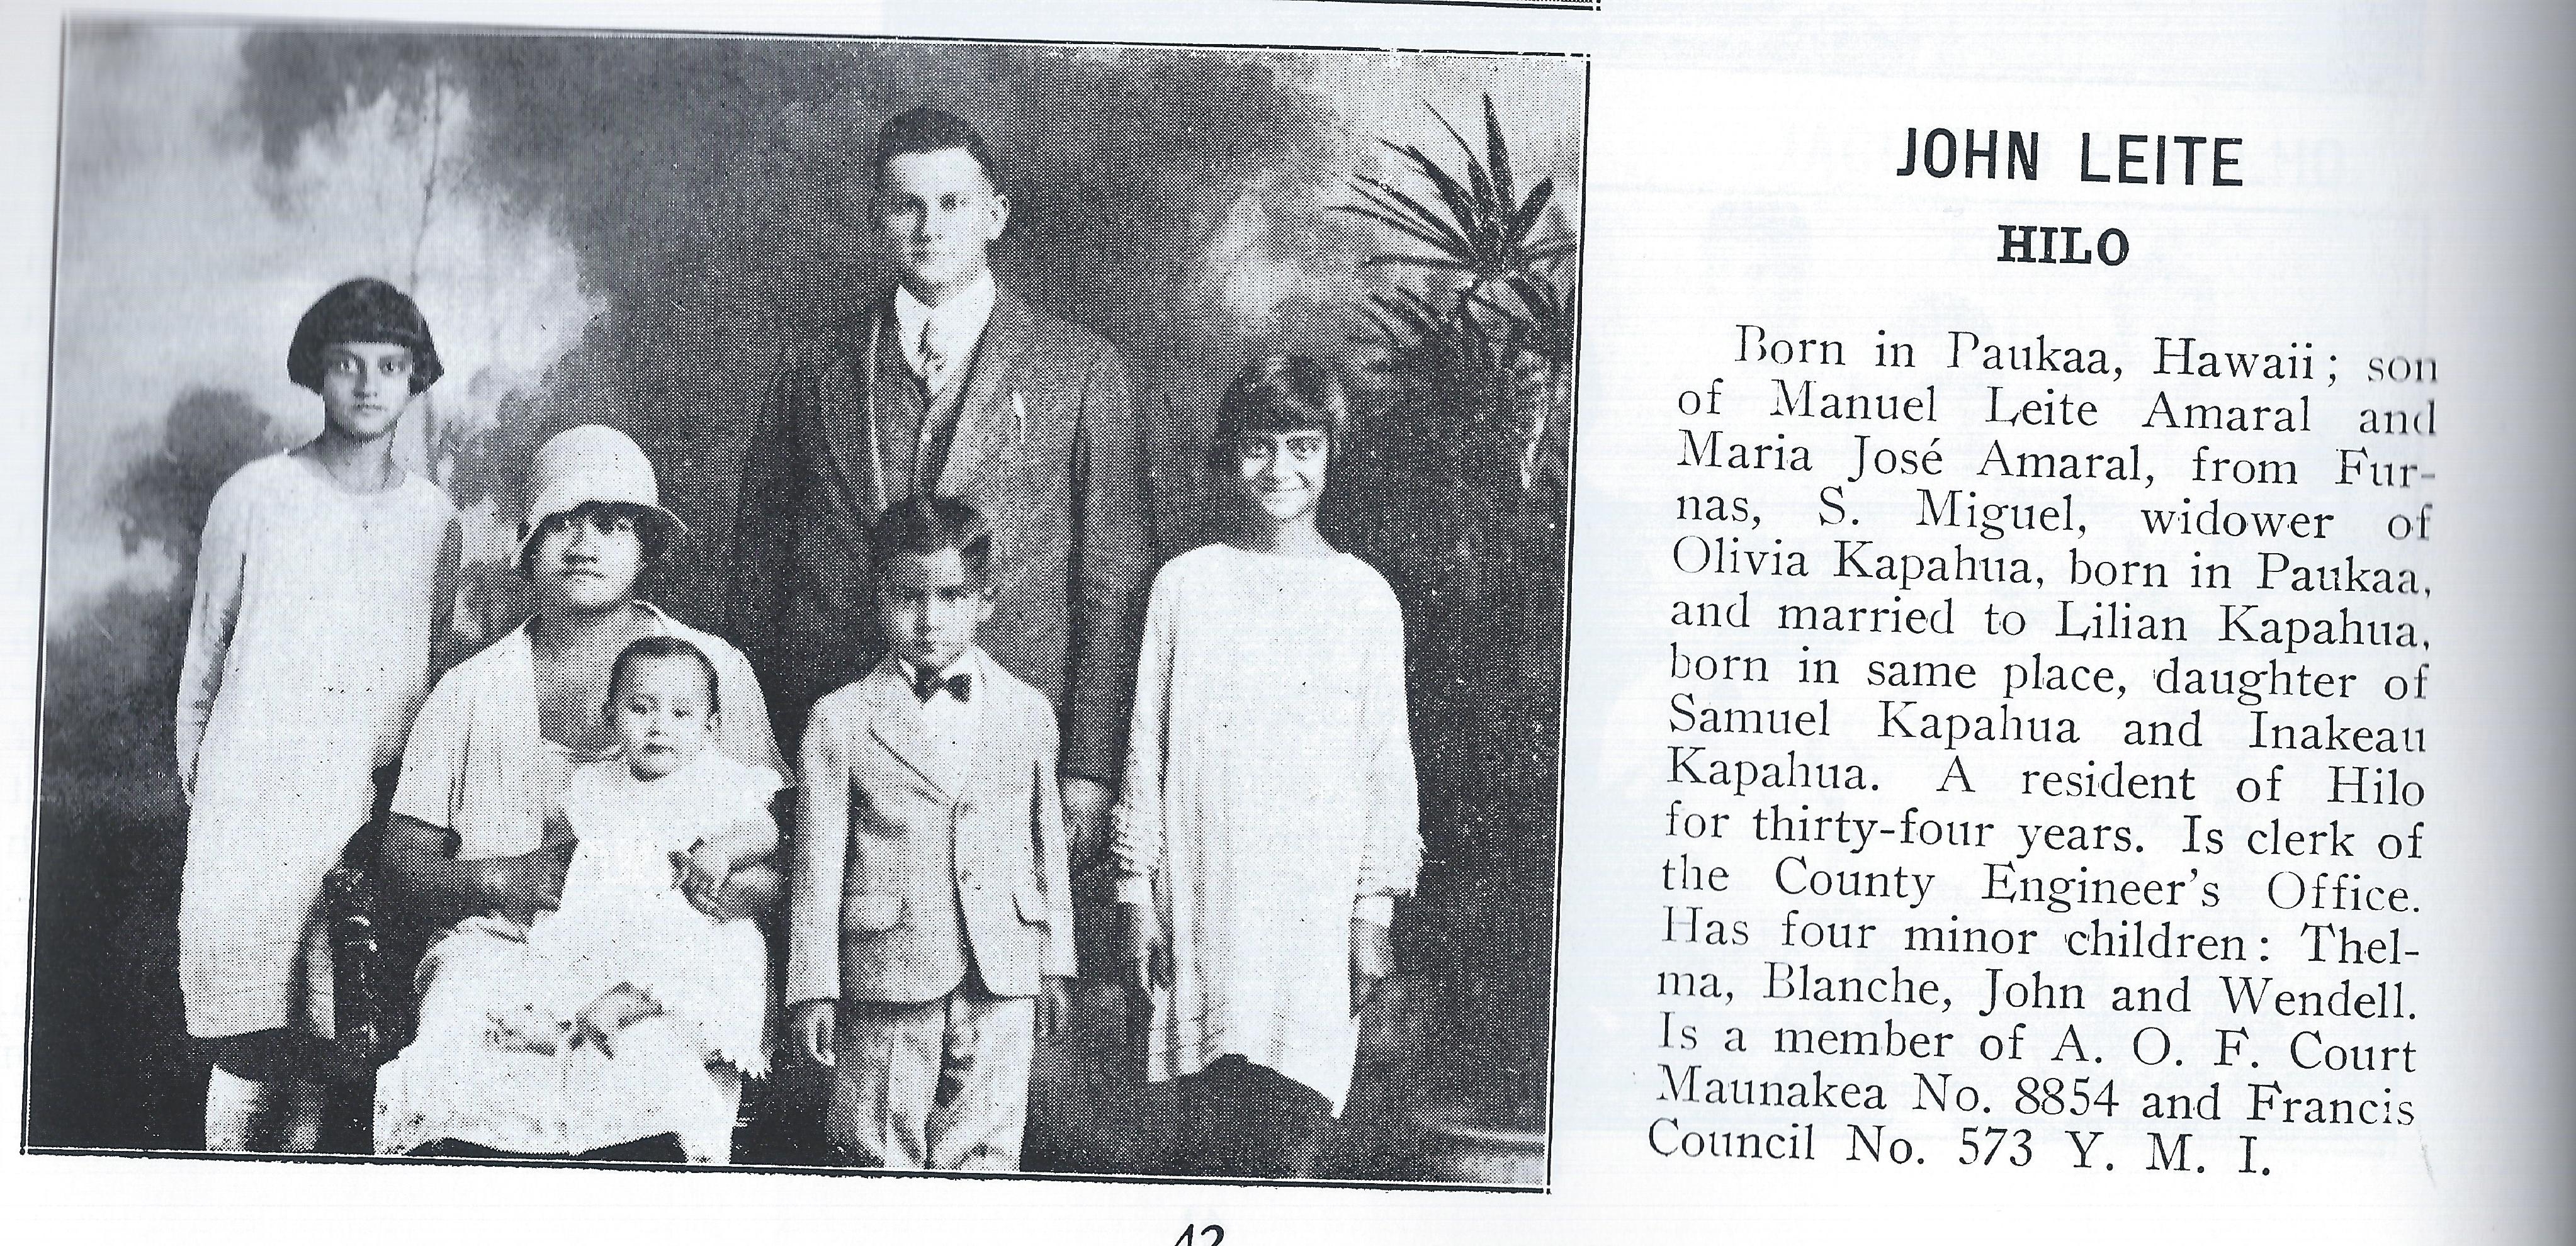 Lillian Kapahua & John Leite family